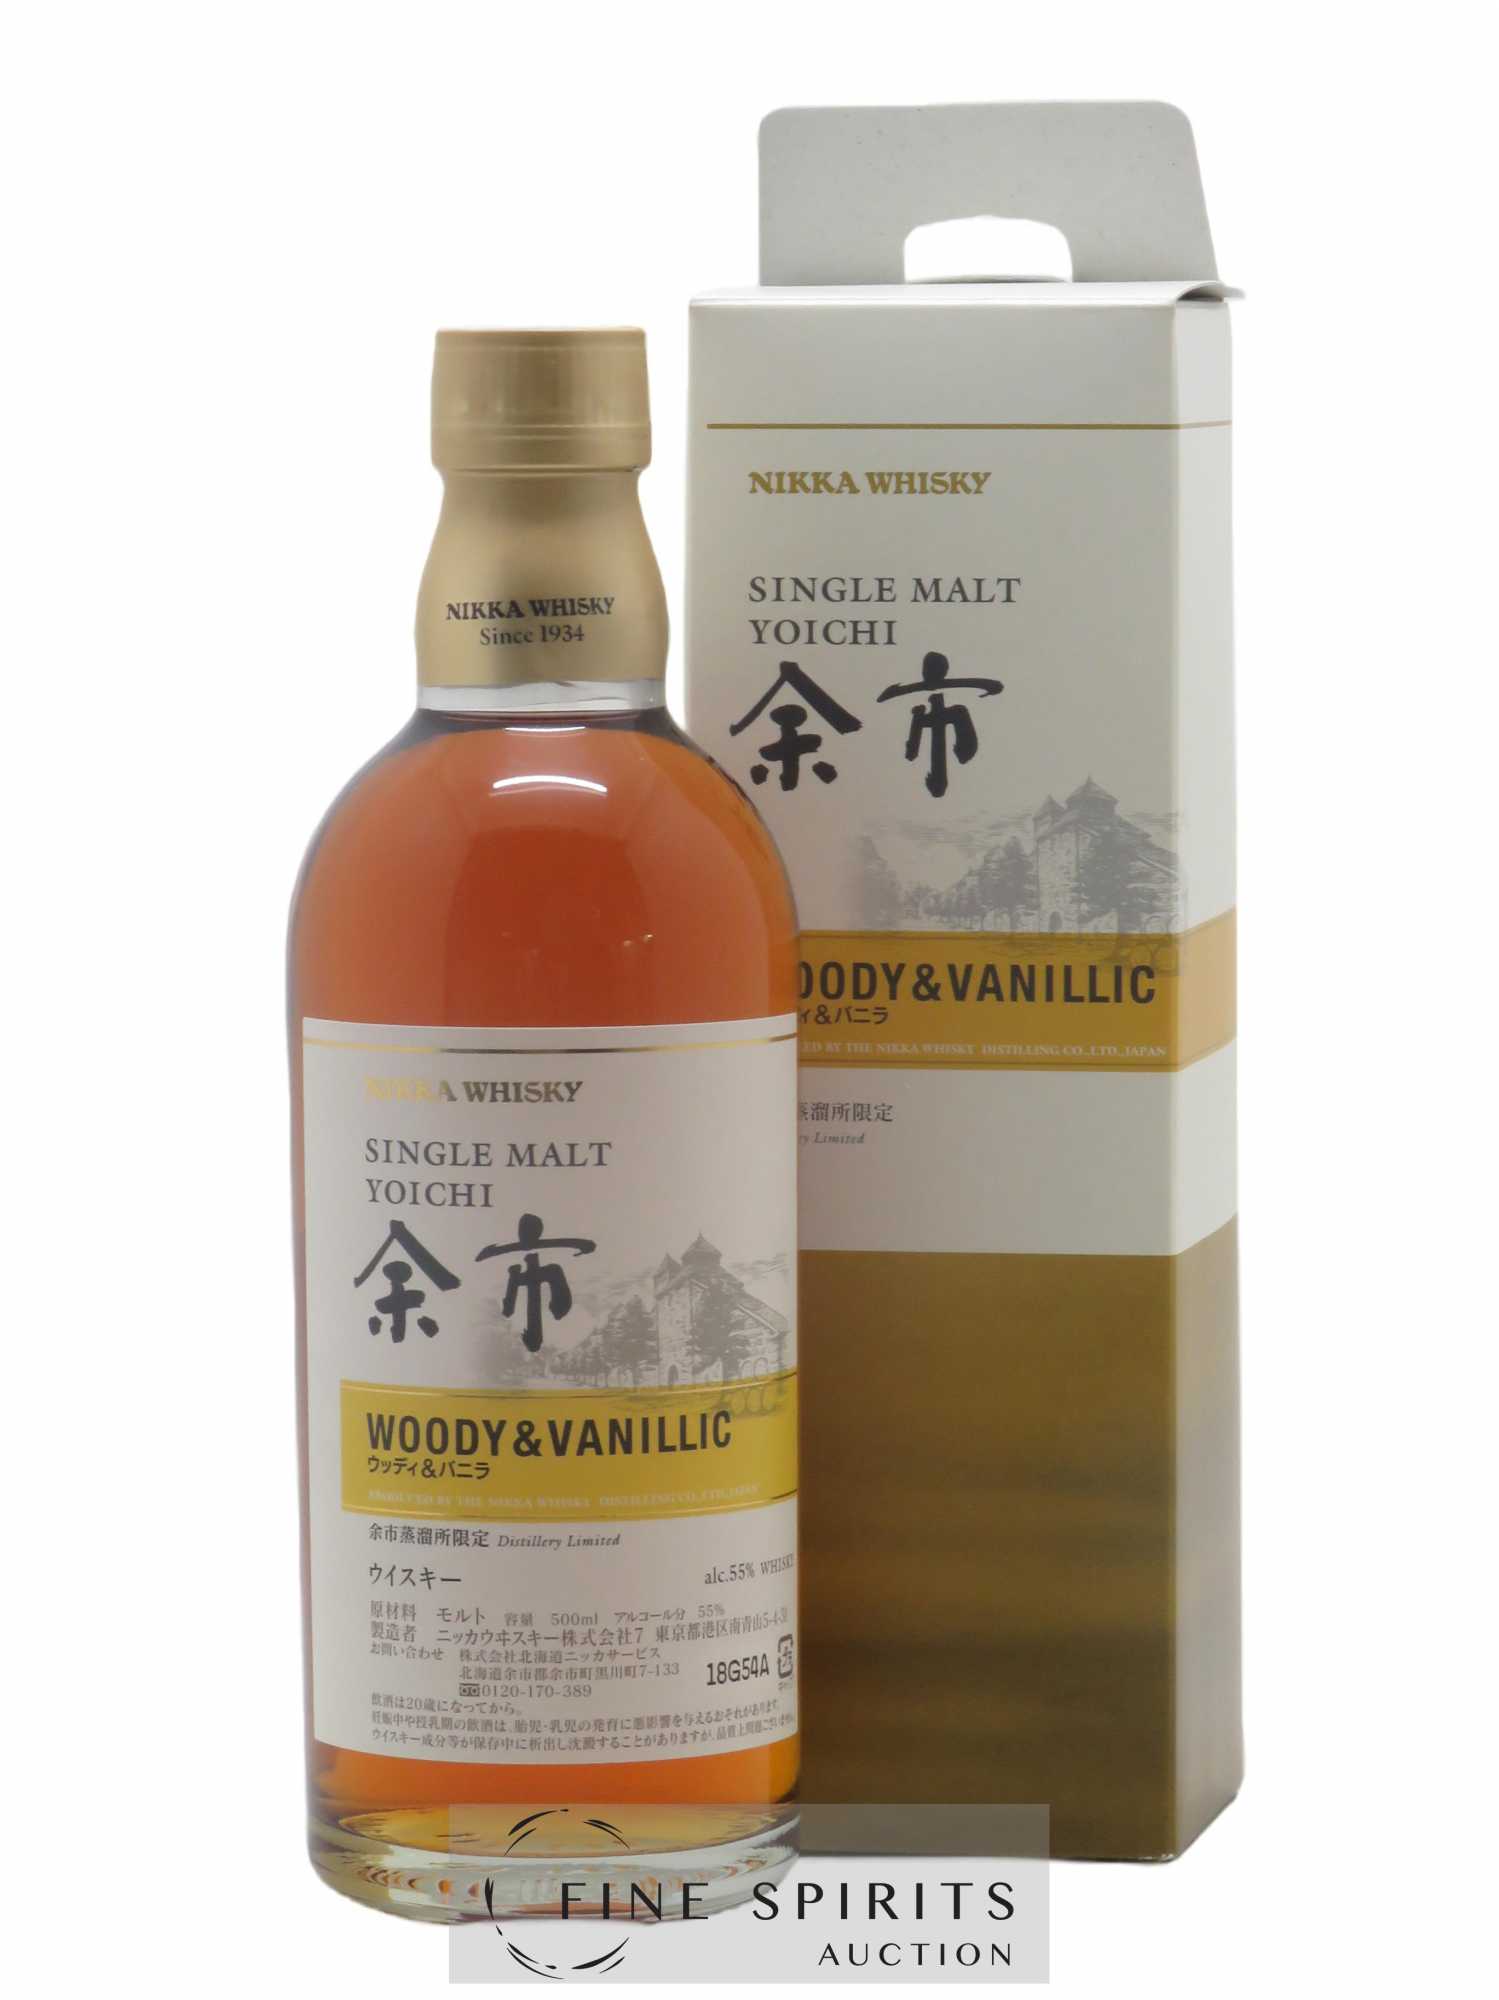 Yoichi Of. Woody & Vanillic Distillery Limited Nikka Whisky (50cl.)